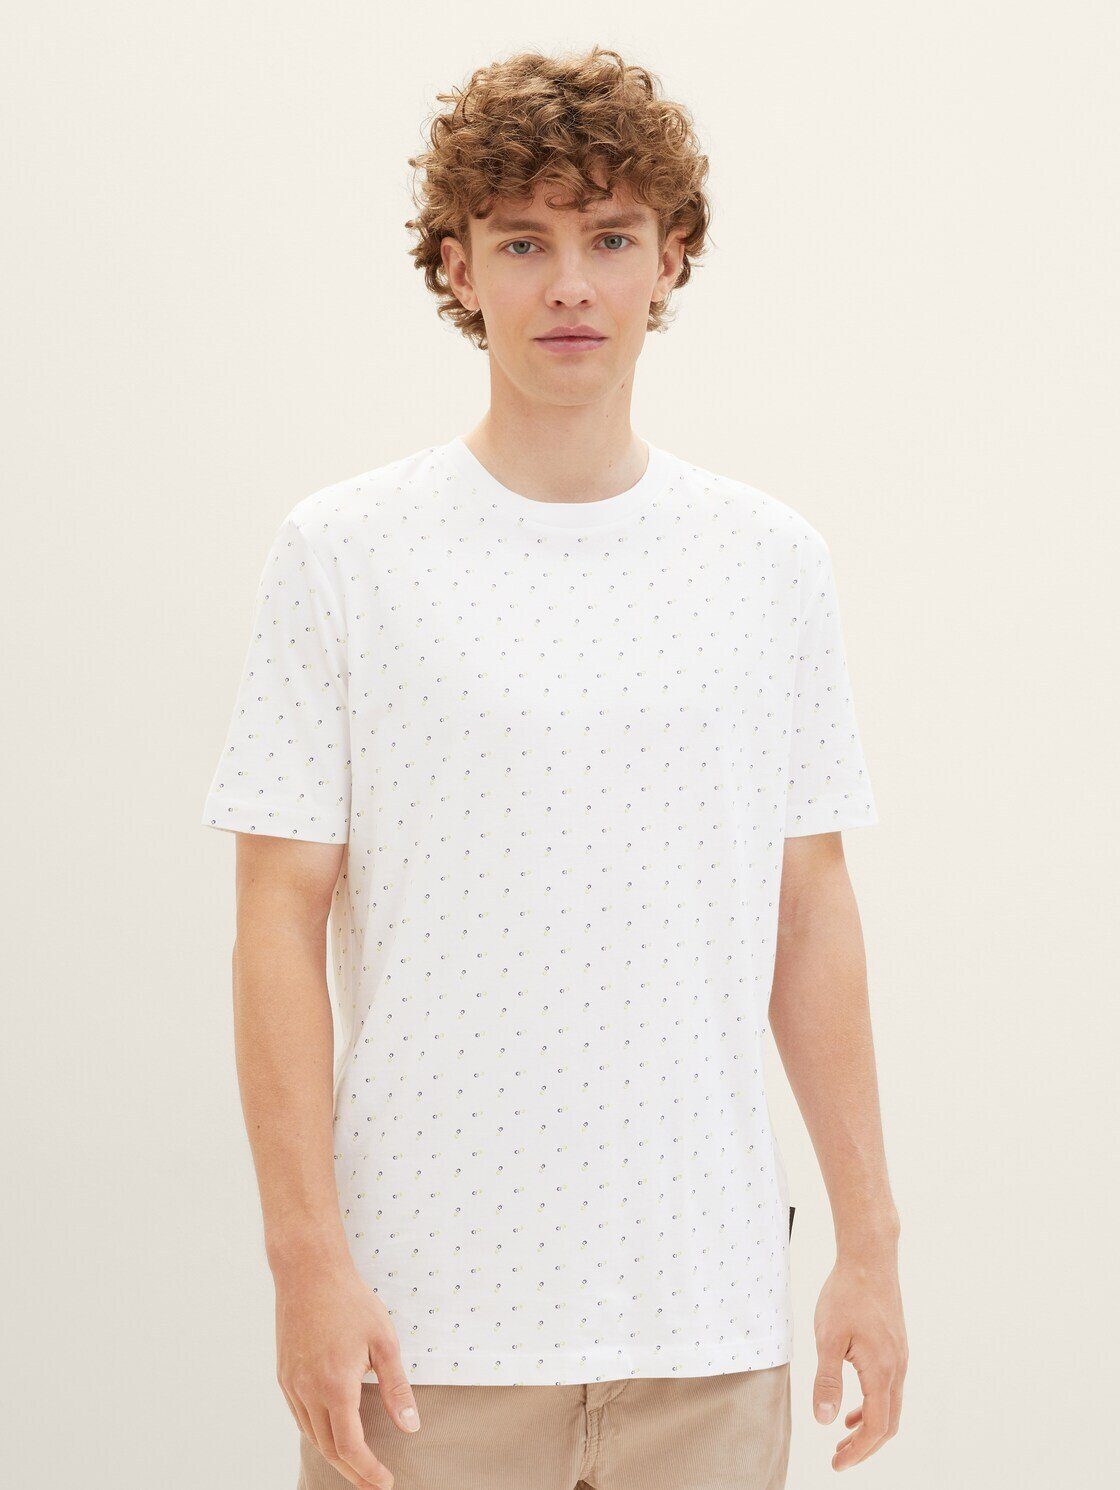 TOM TAILOR Denim T-Shirt T-Shirt mit Allover-Print white double d print